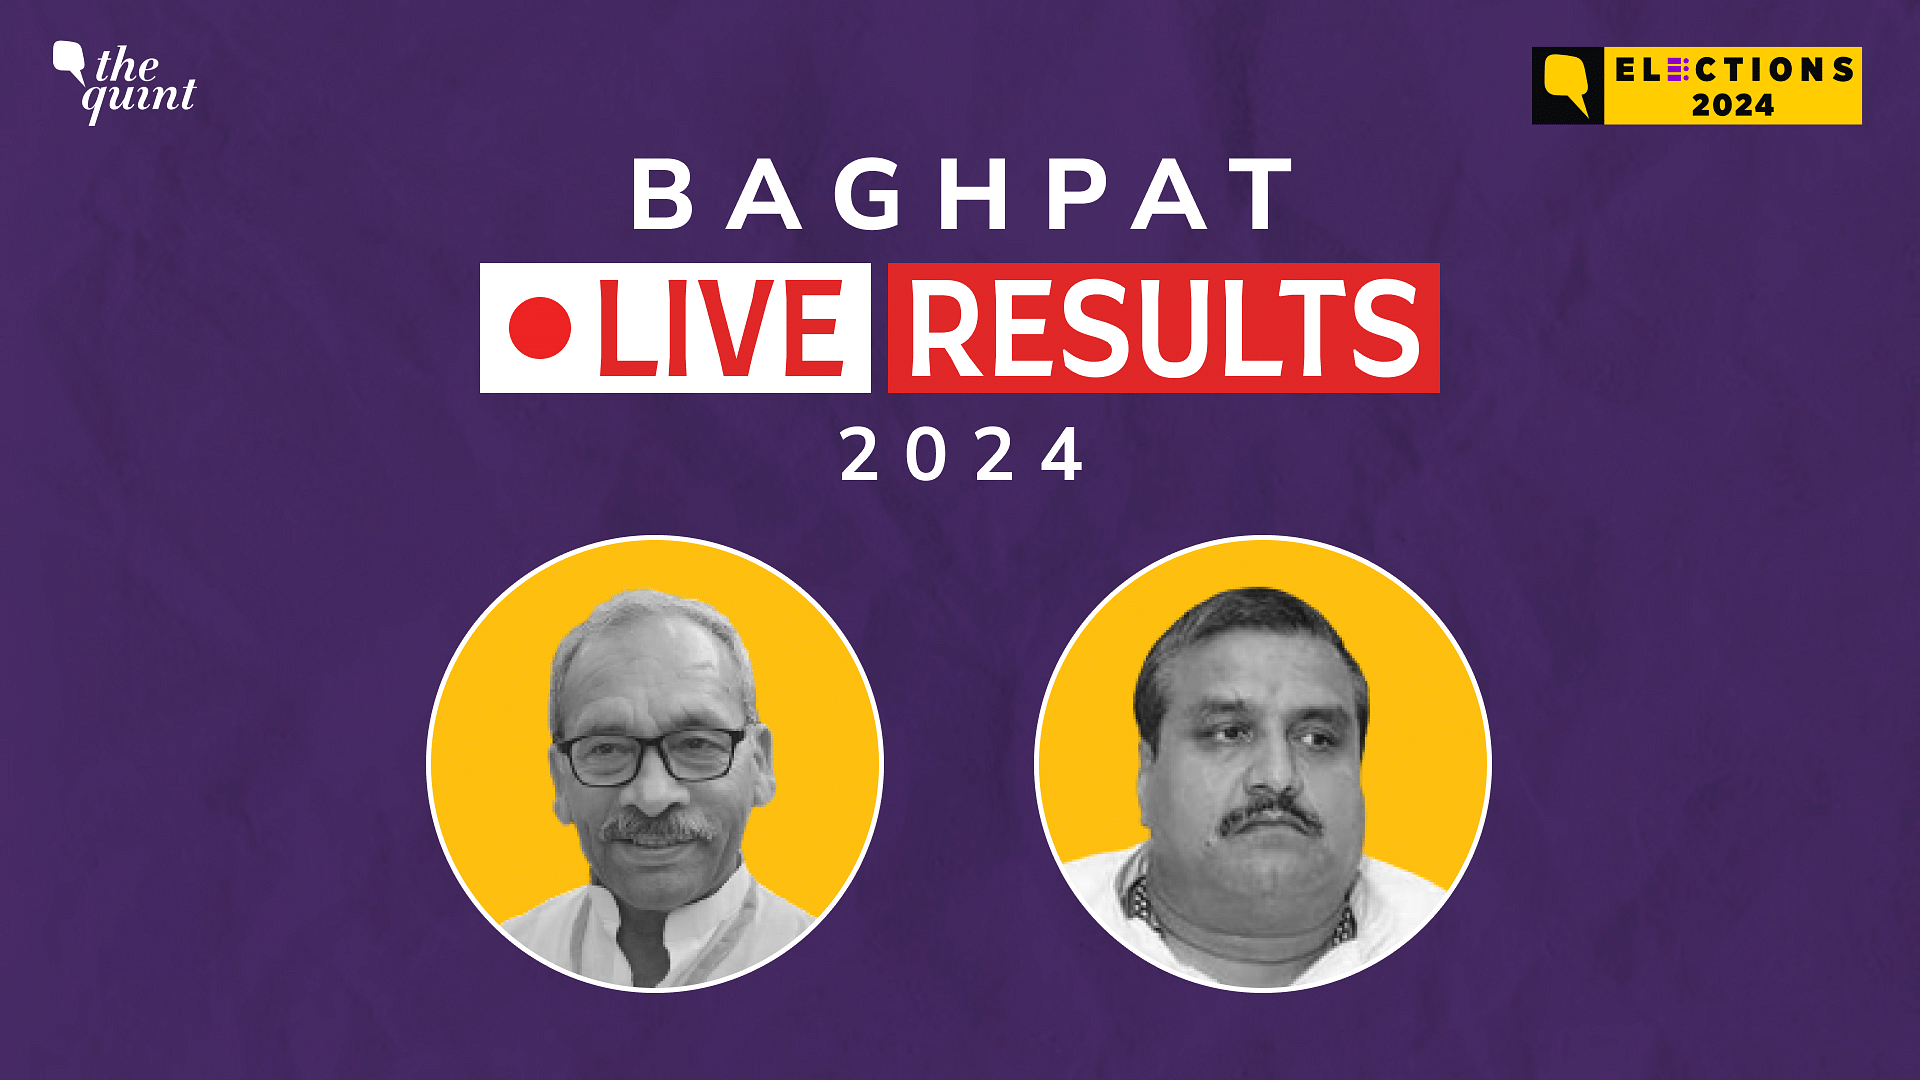 <div class="paragraphs"><p>Baghpat Election Result live updates for Lok Sabha election 2024</p></div>